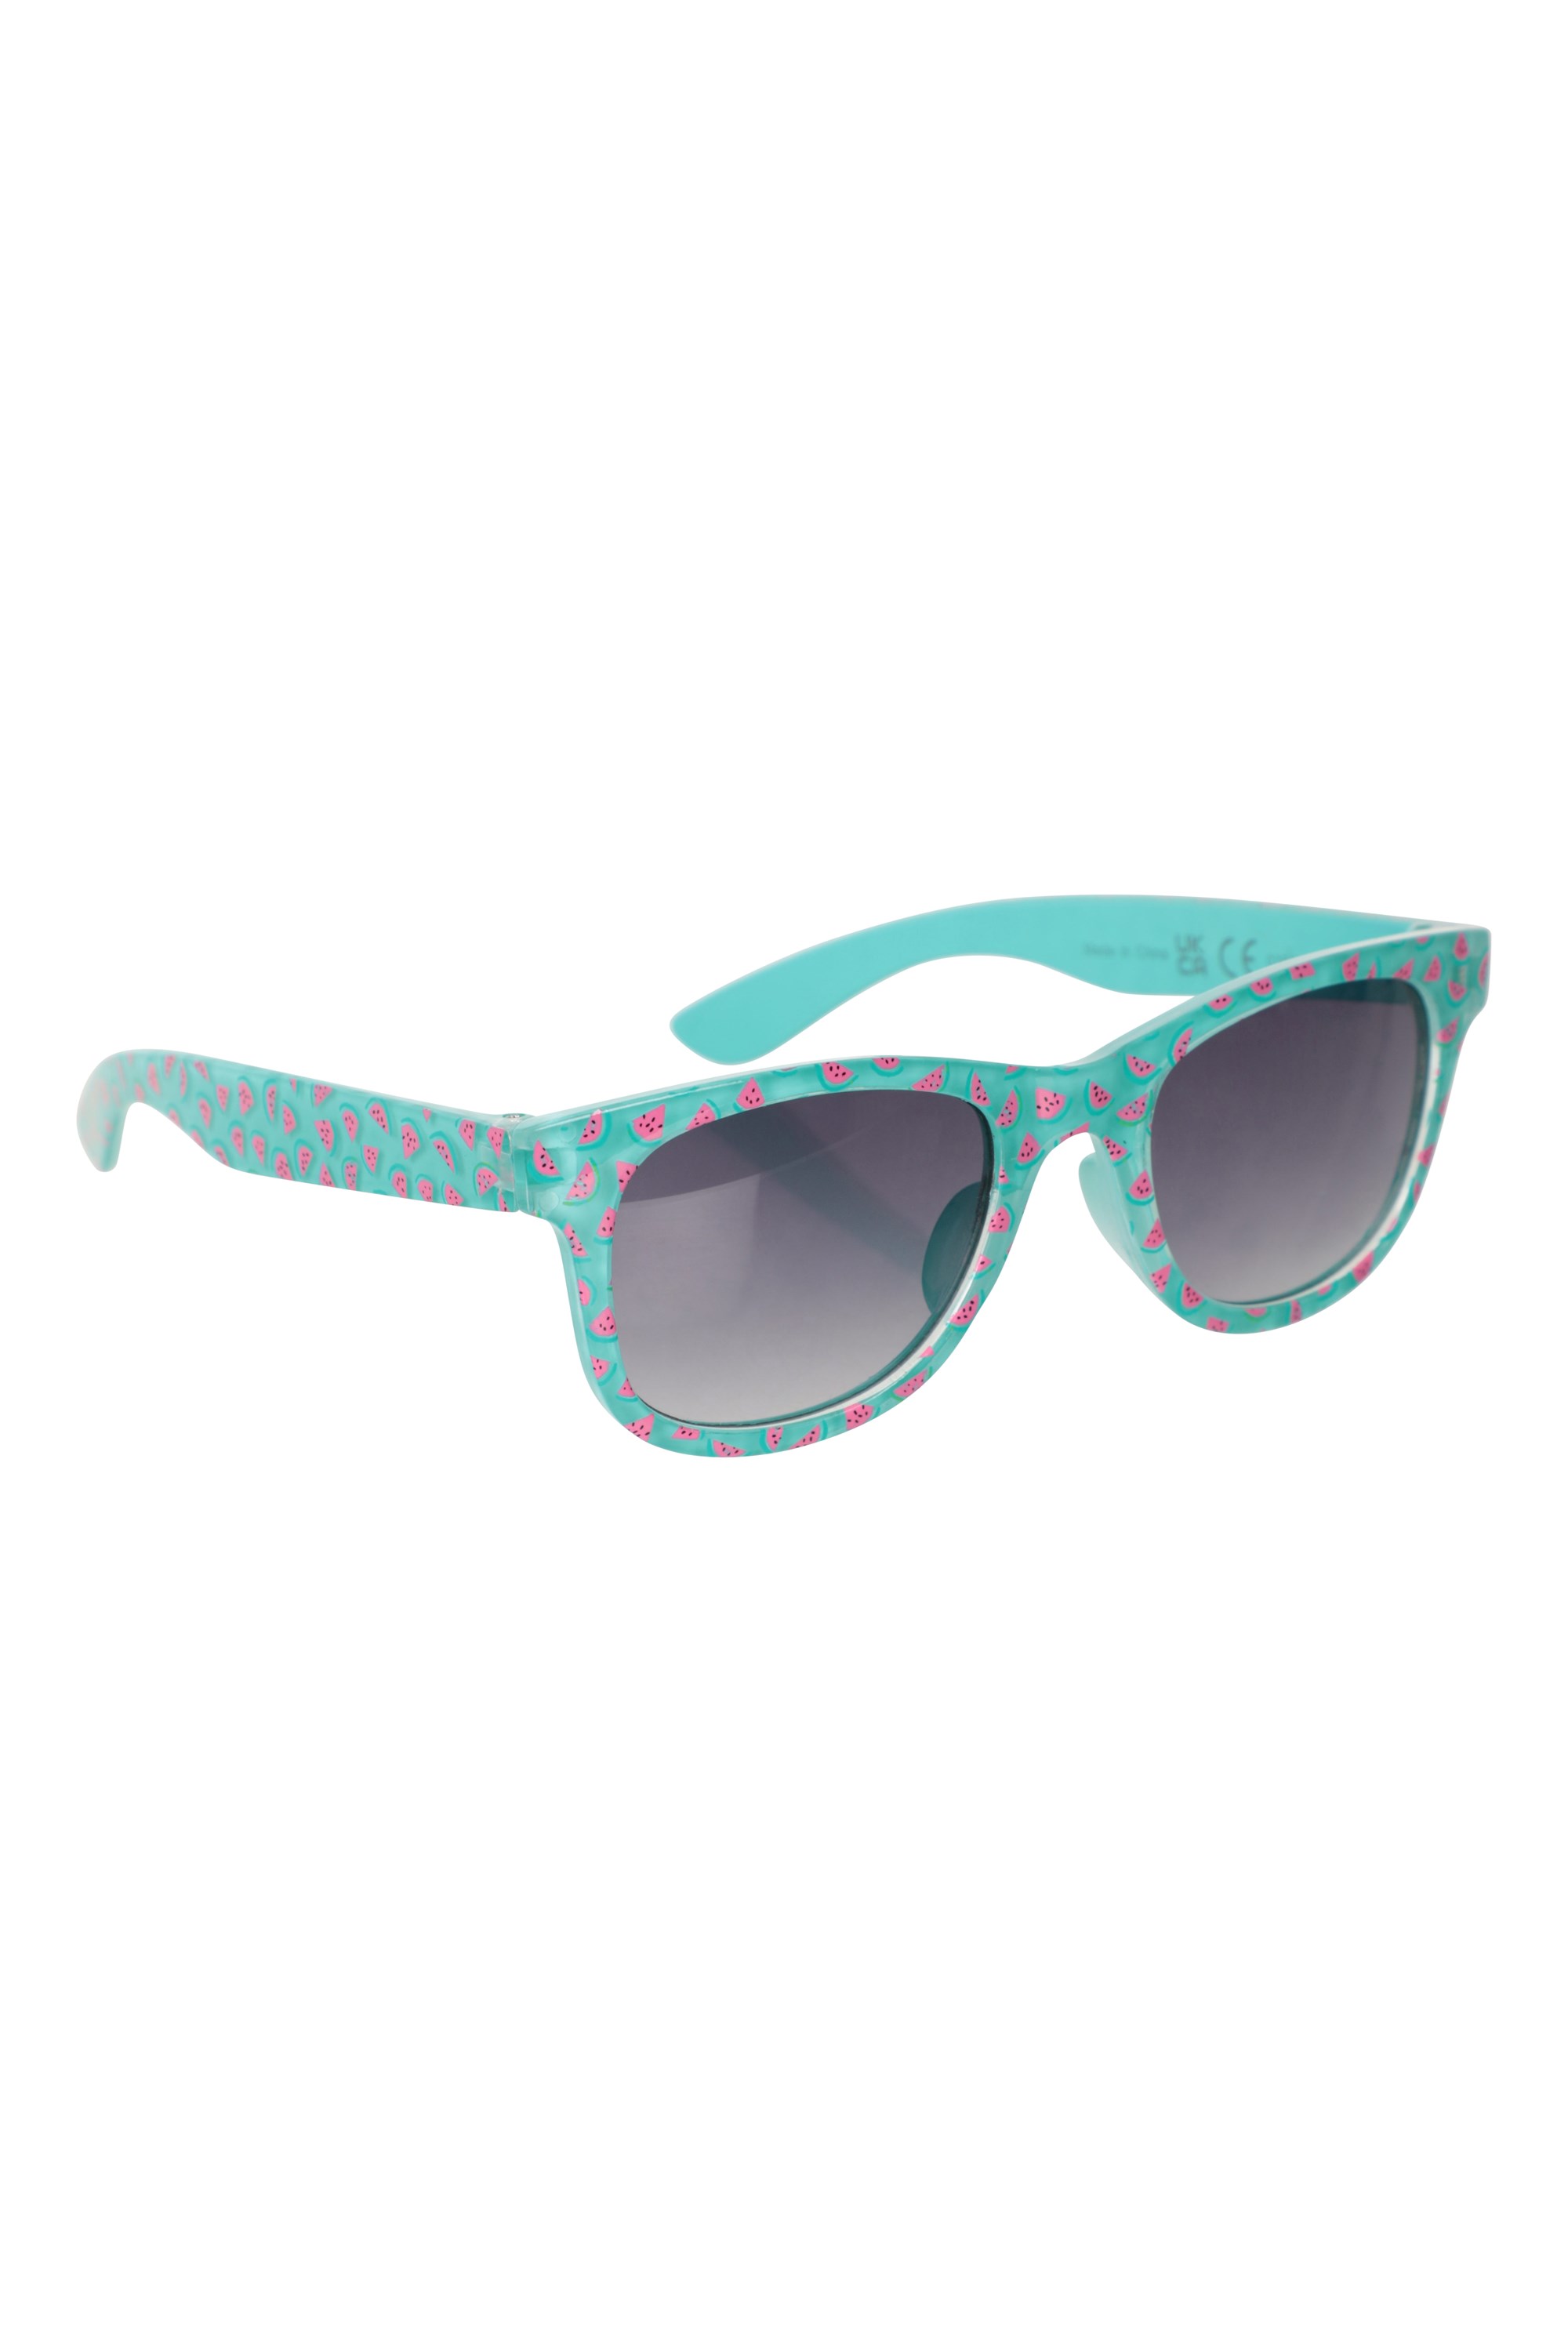 Littlehampton Kids Sunglasses - Turquoise